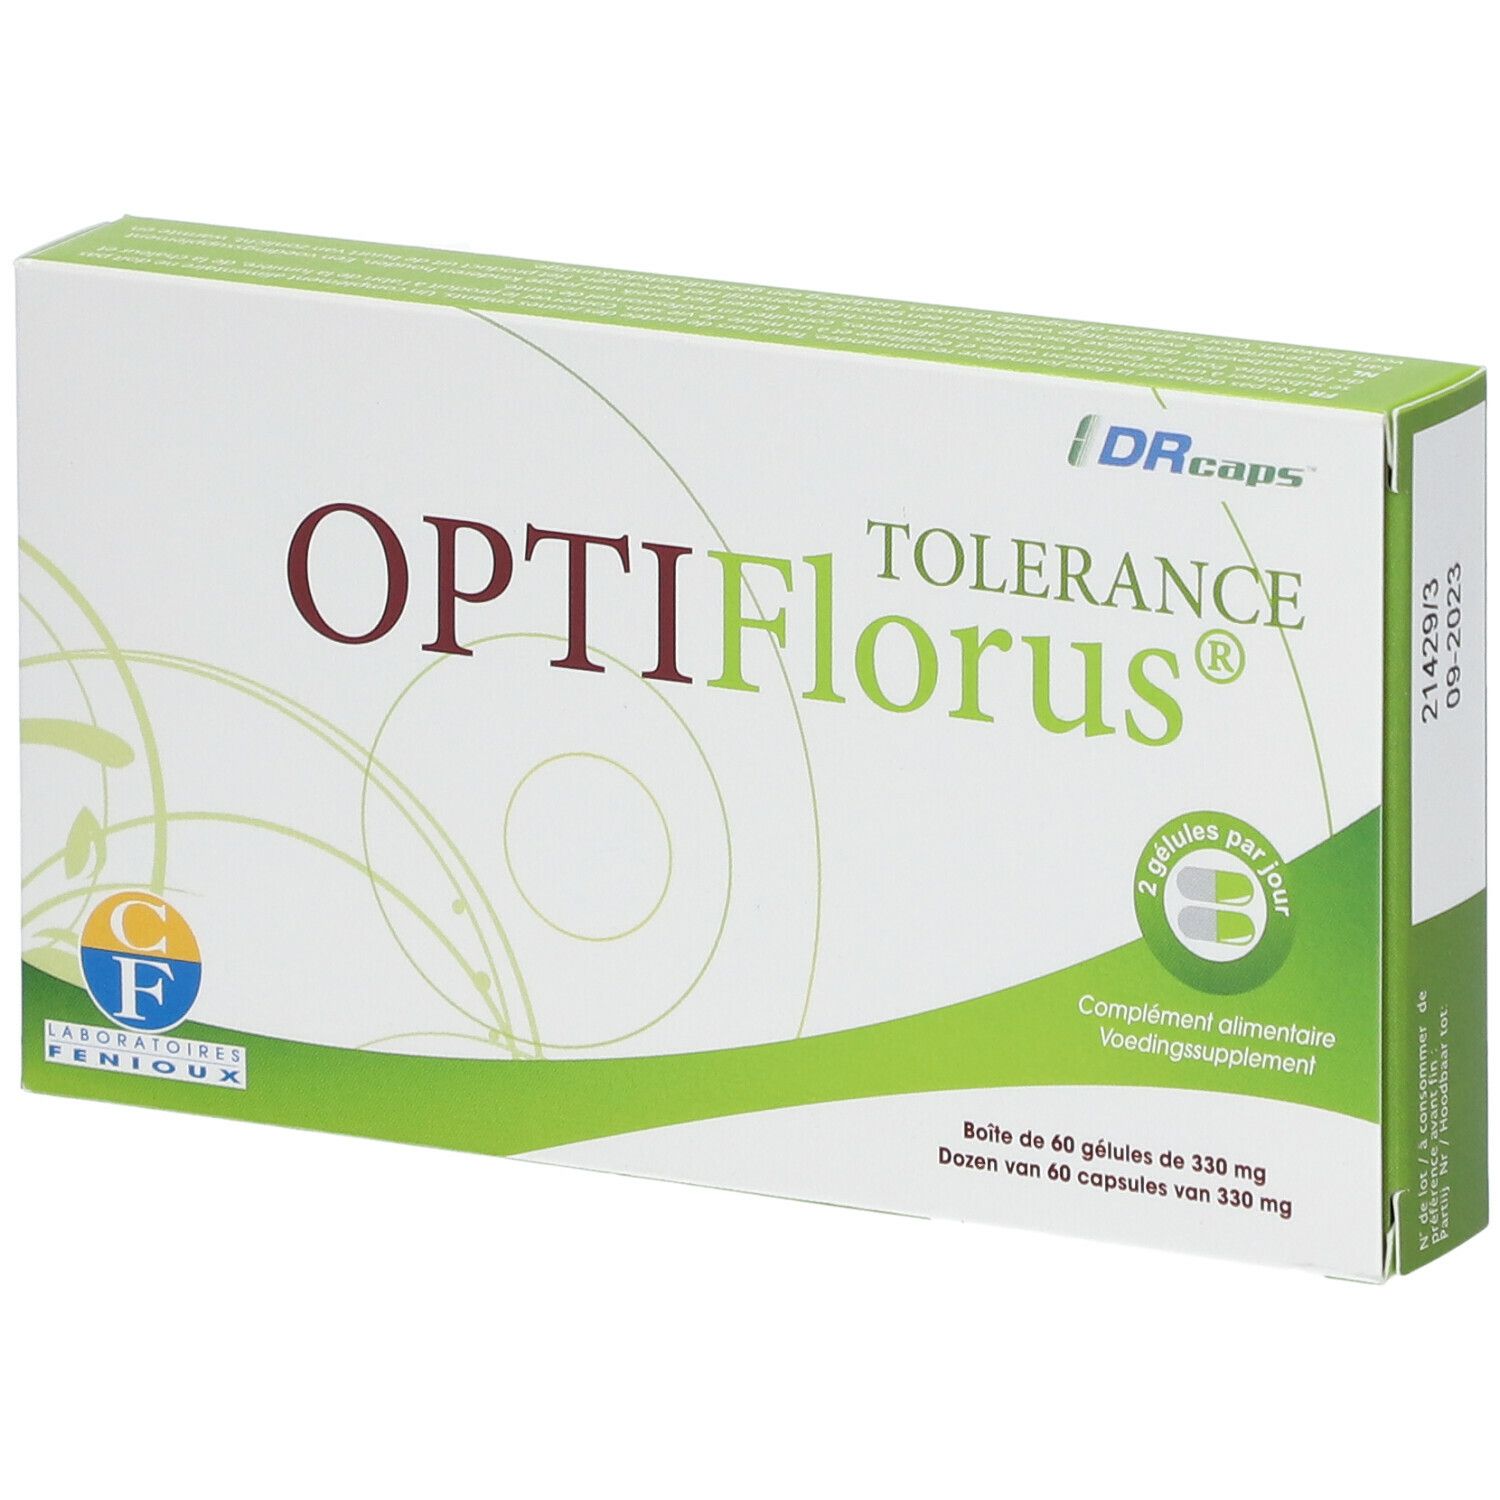 Laboratoires Fenioux OPTIFlorus® Tolerance